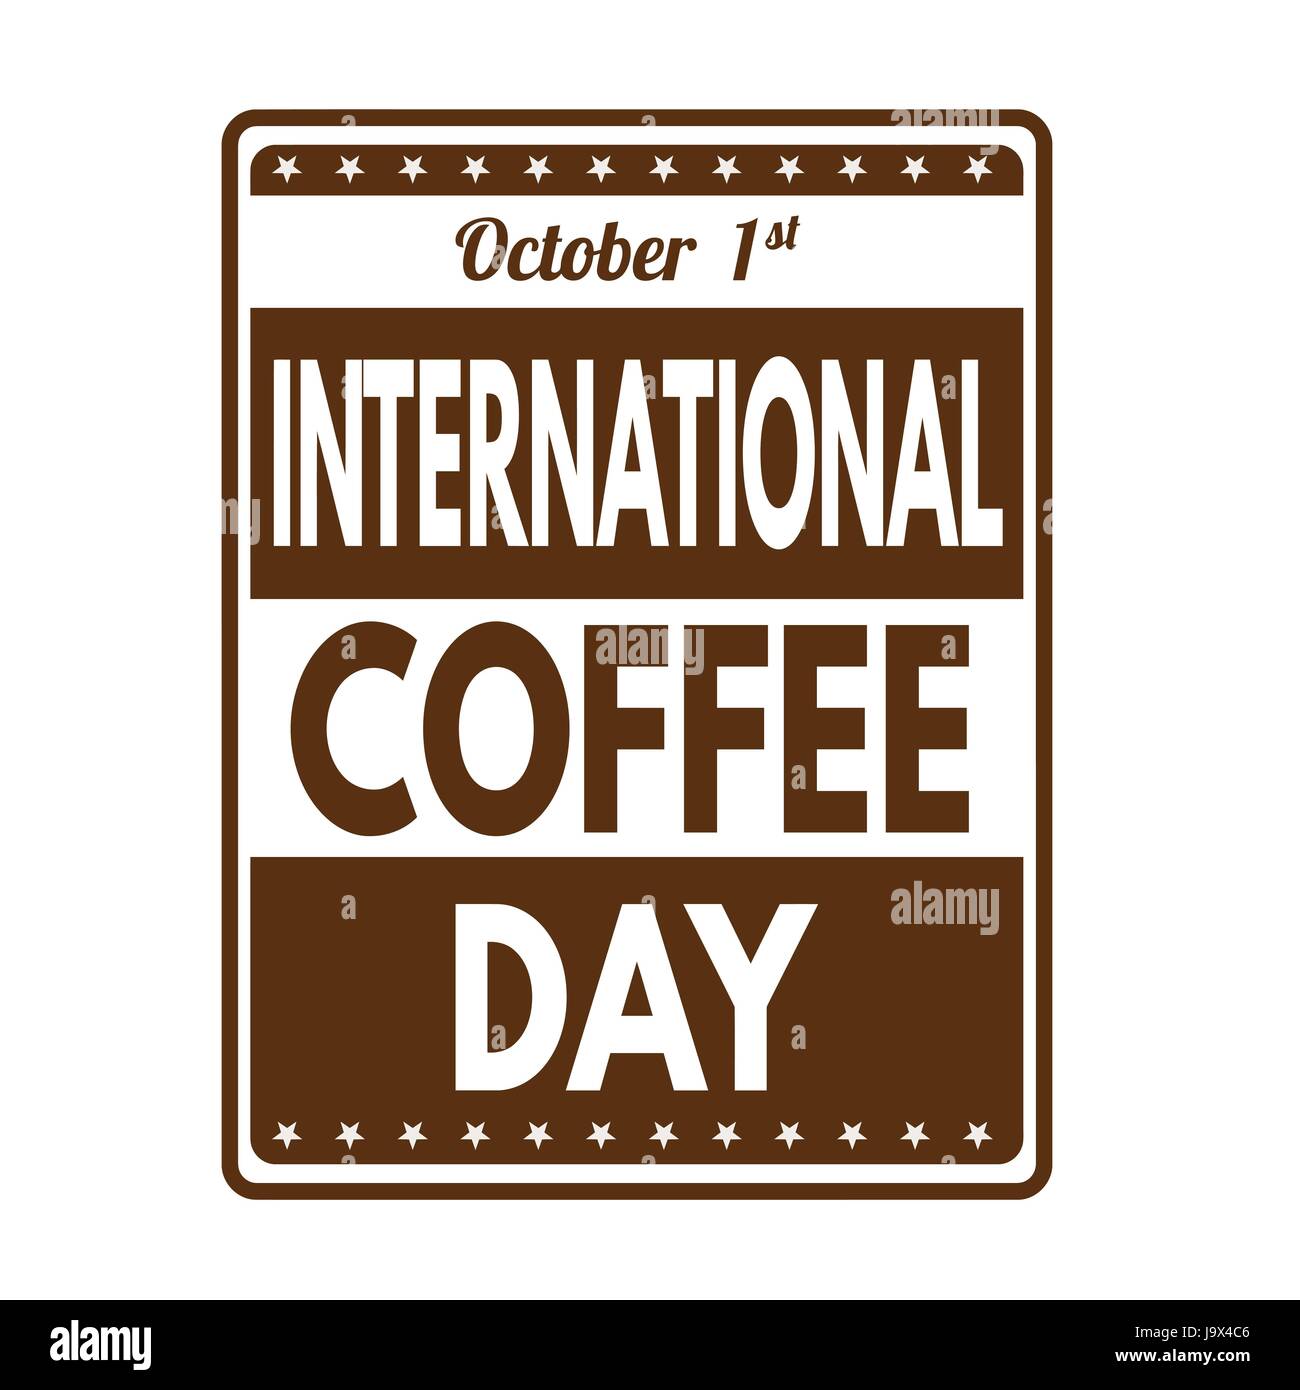 International coffee day grunge rubber stamp on white background